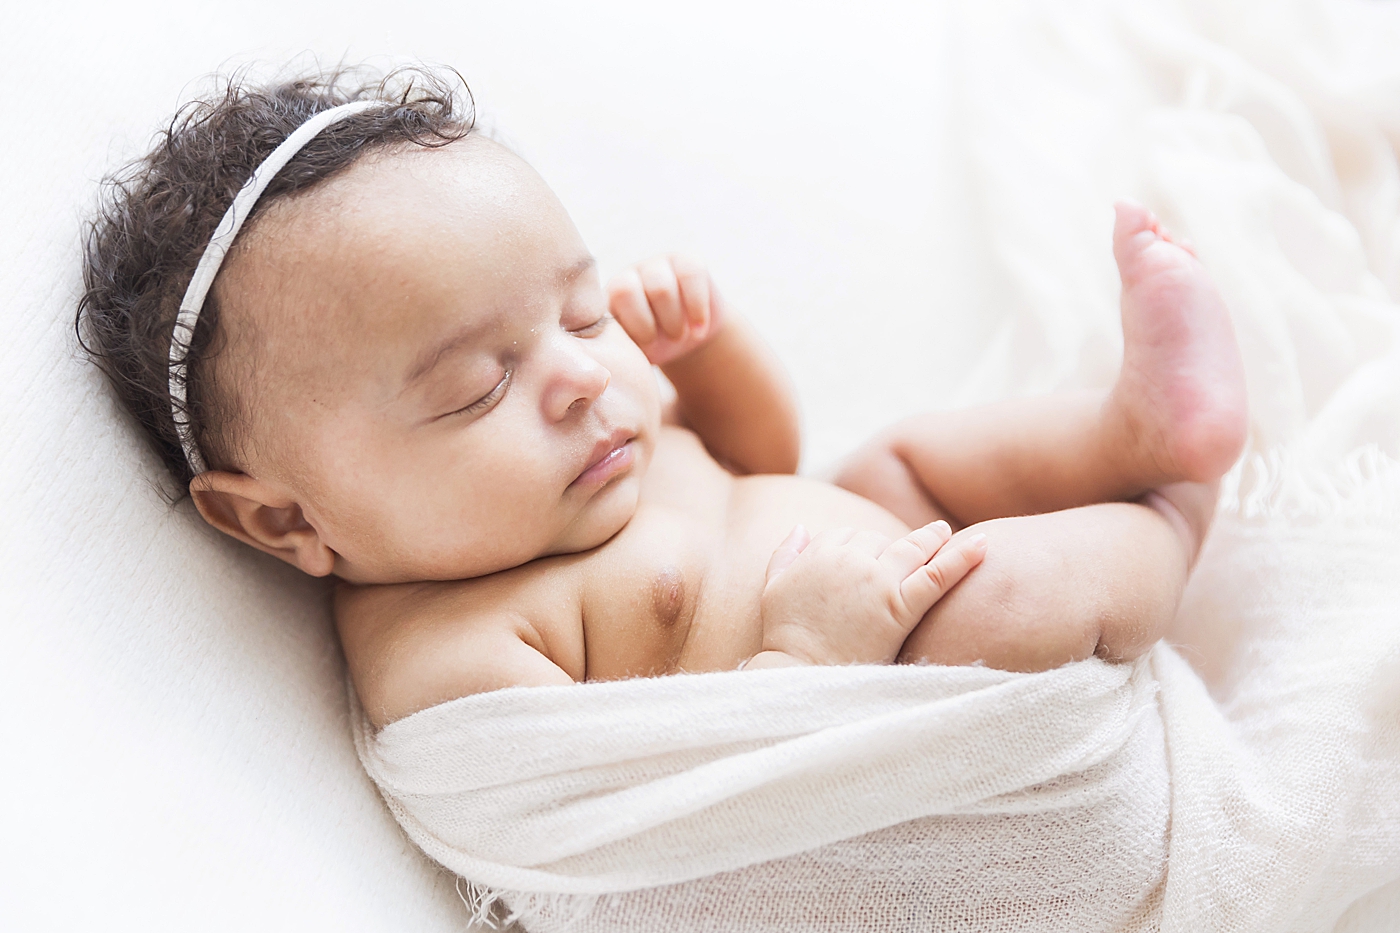 Newborn photos of baby girl with Houston newborn photographer, Fresh Light Photography.